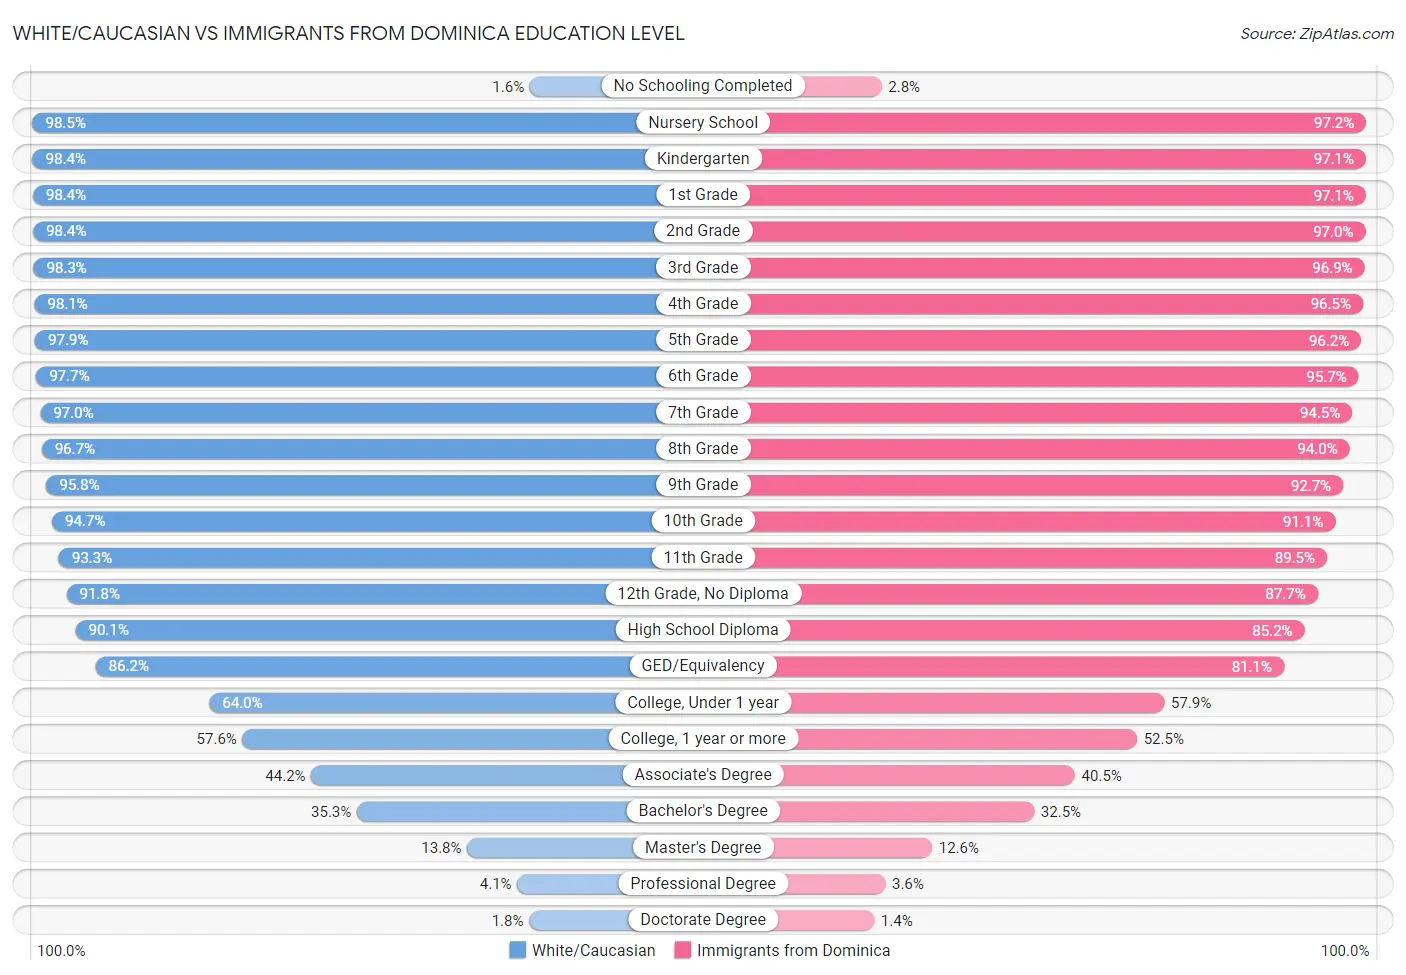 White/Caucasian vs Immigrants from Dominica Education Level